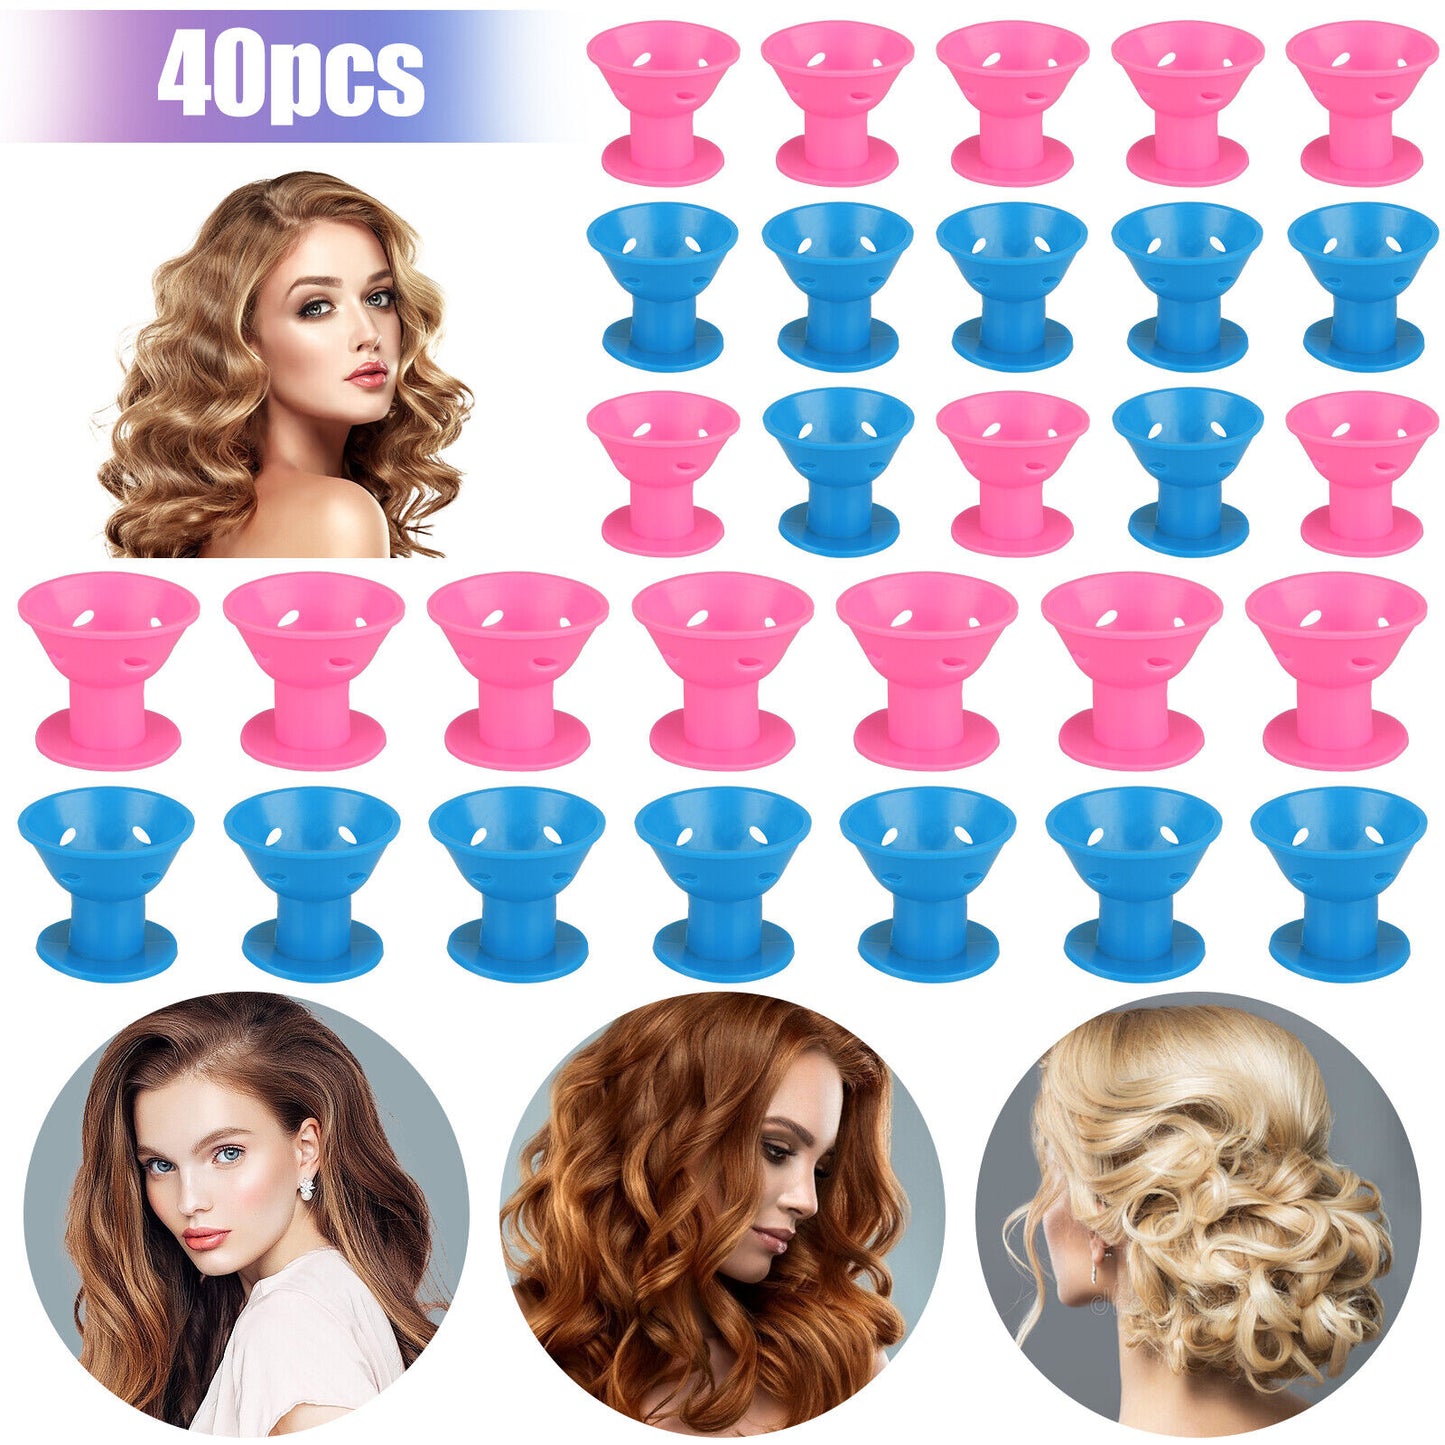 40pcs Magic Silicone Hair Rollers Heatless Curling Rod Headband DIY Hair Styles S L Random Color